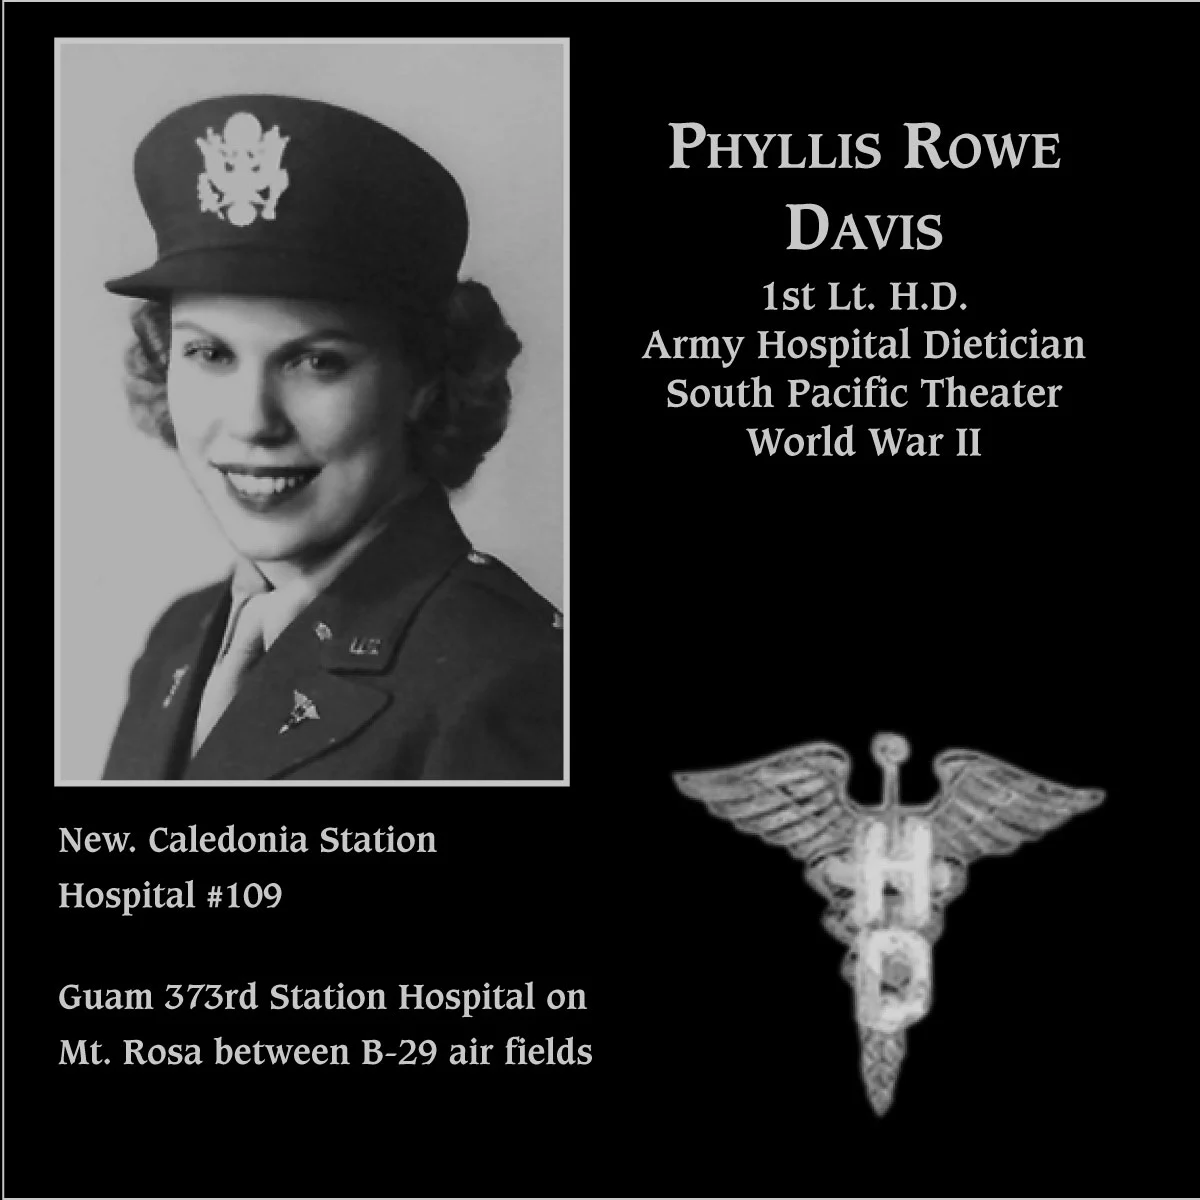 Phyllis Rowe Davis